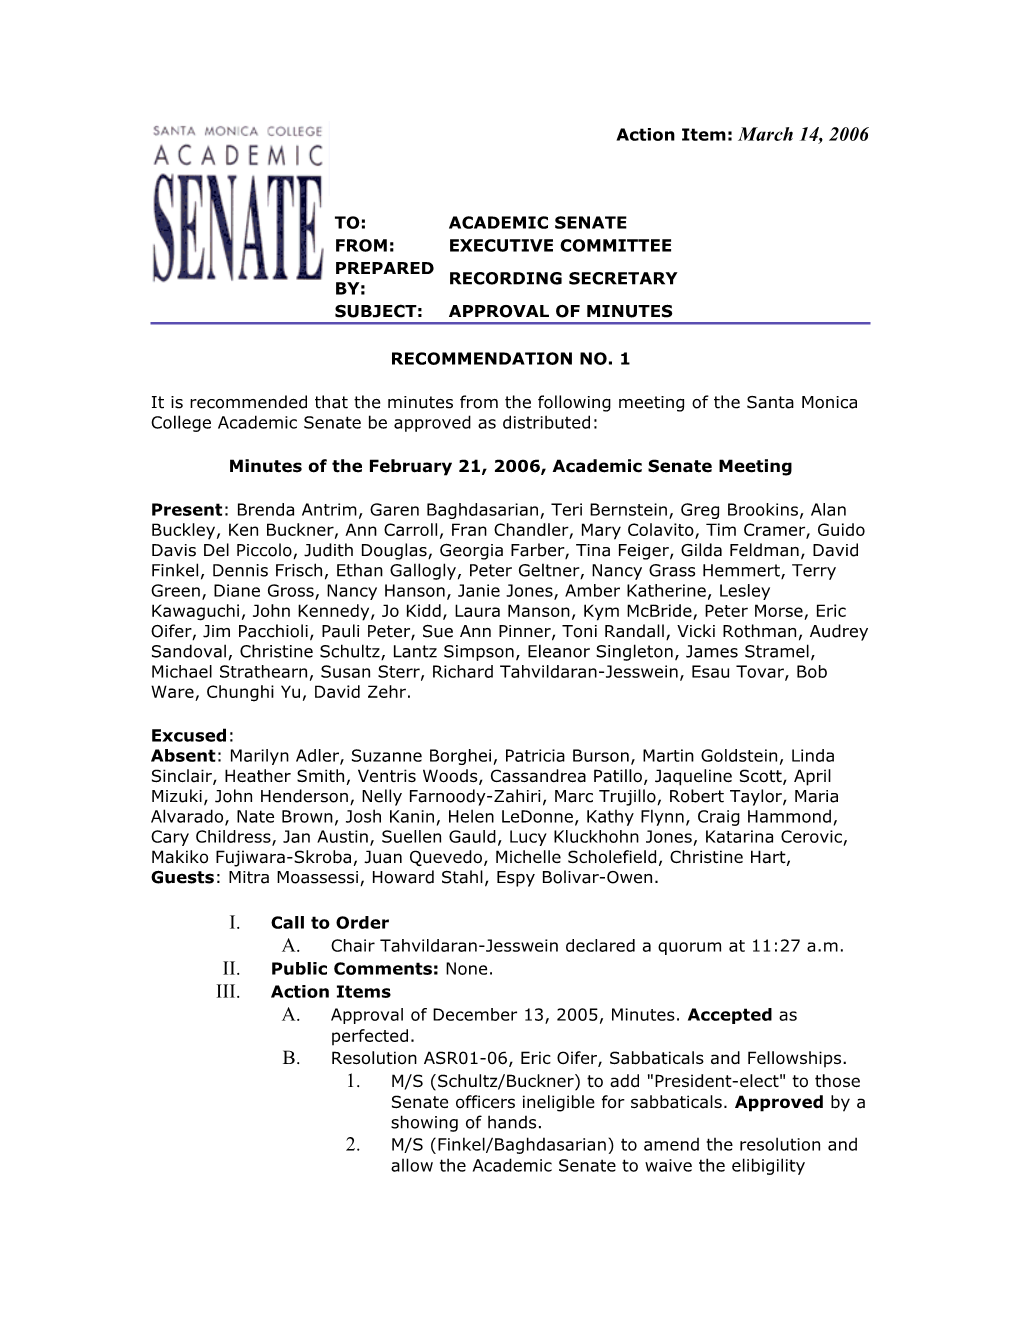 Minutes of the February 21, 2006, Academic Senate Meeting